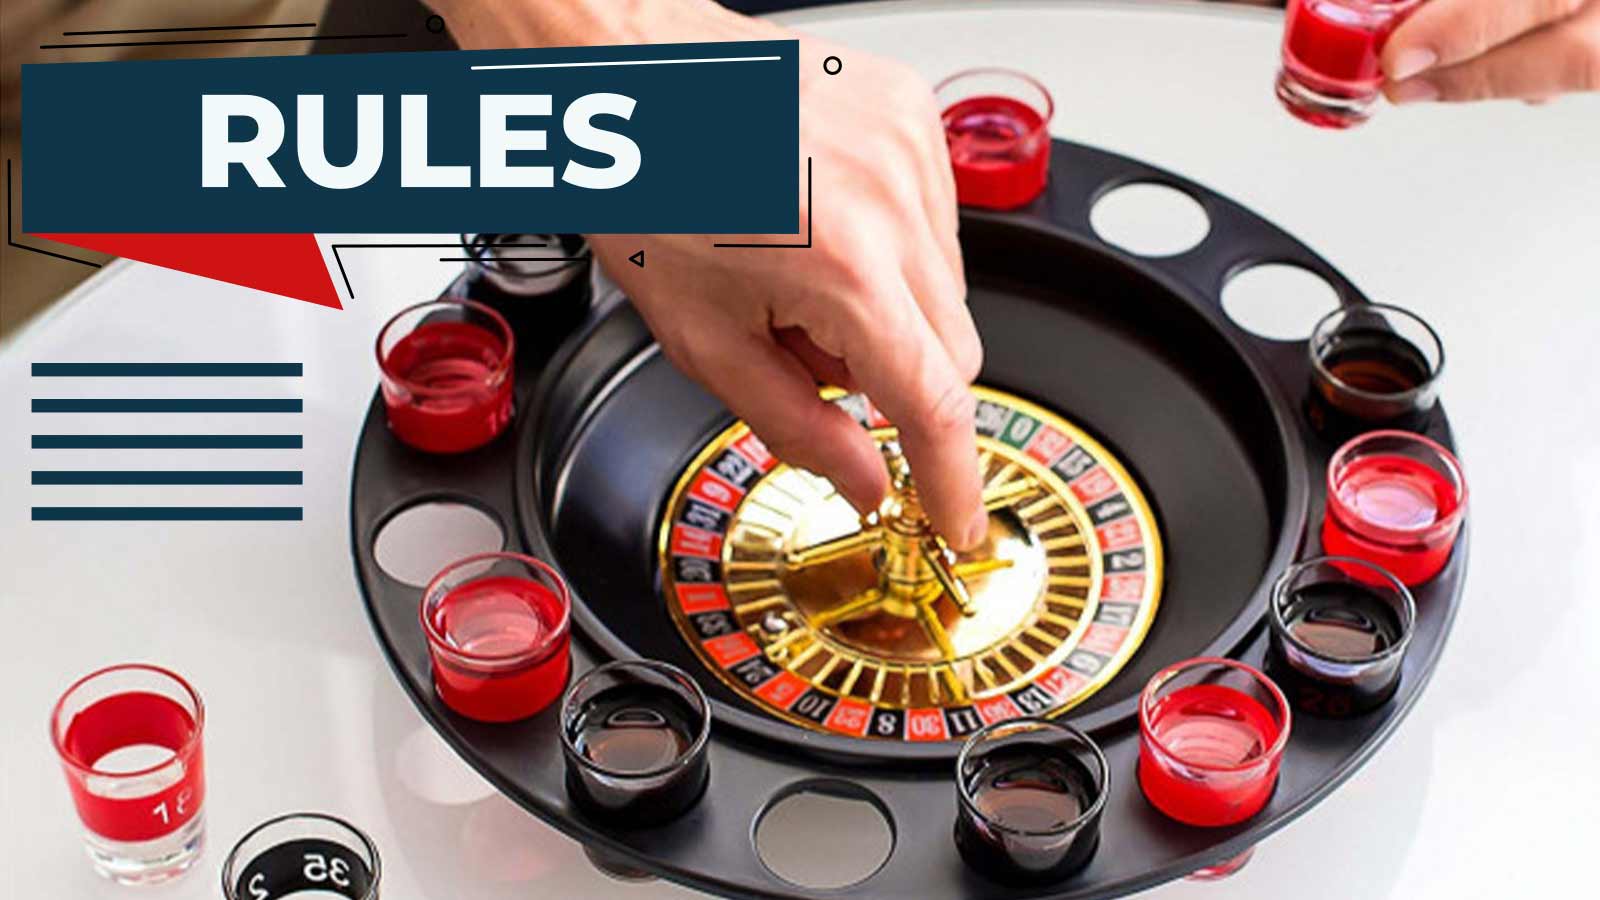 Shot roulette rules explained